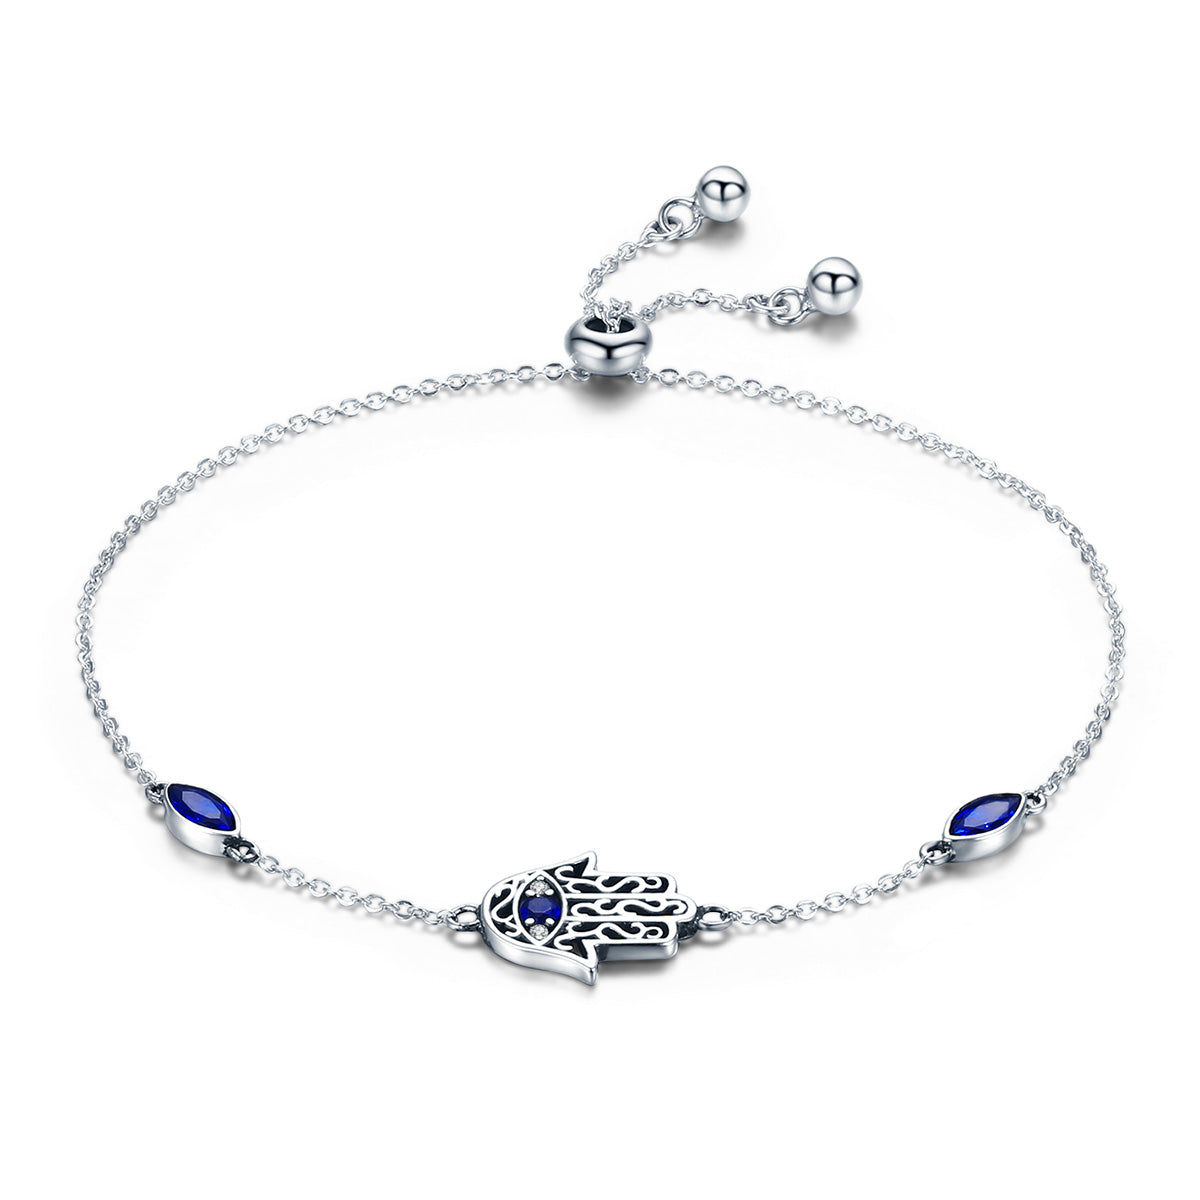 Evil Eye Bracelet Chain with Blue CZ - Sterling Silver 925 - NEW622